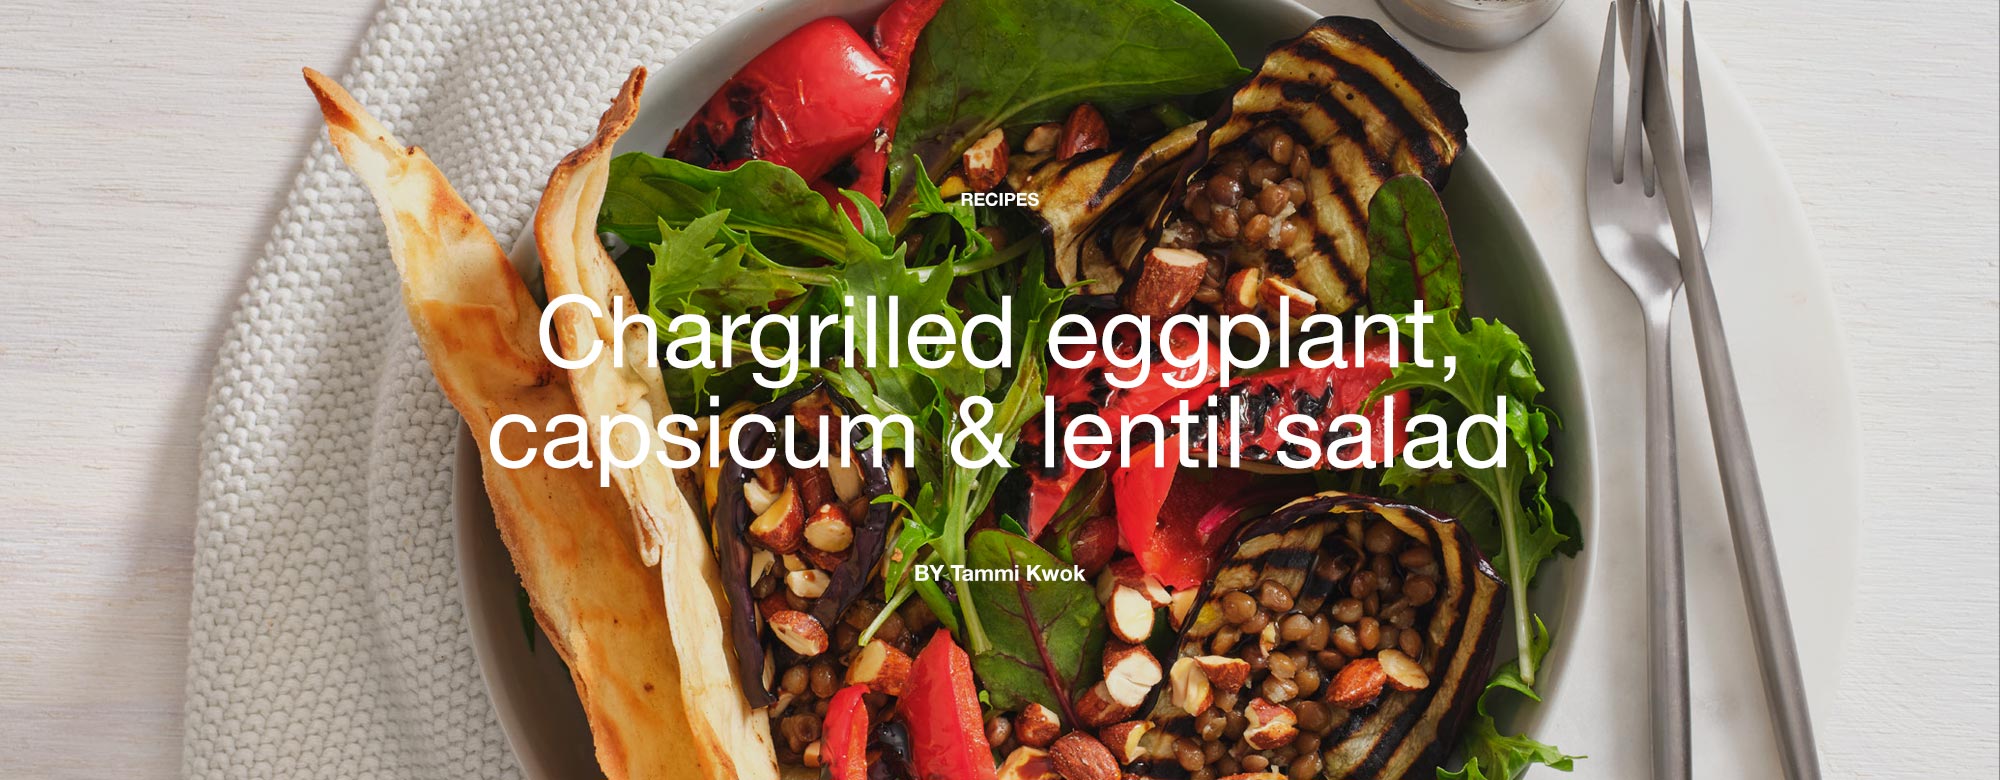 Chargrilled eggplant, capsicum and lentil salad